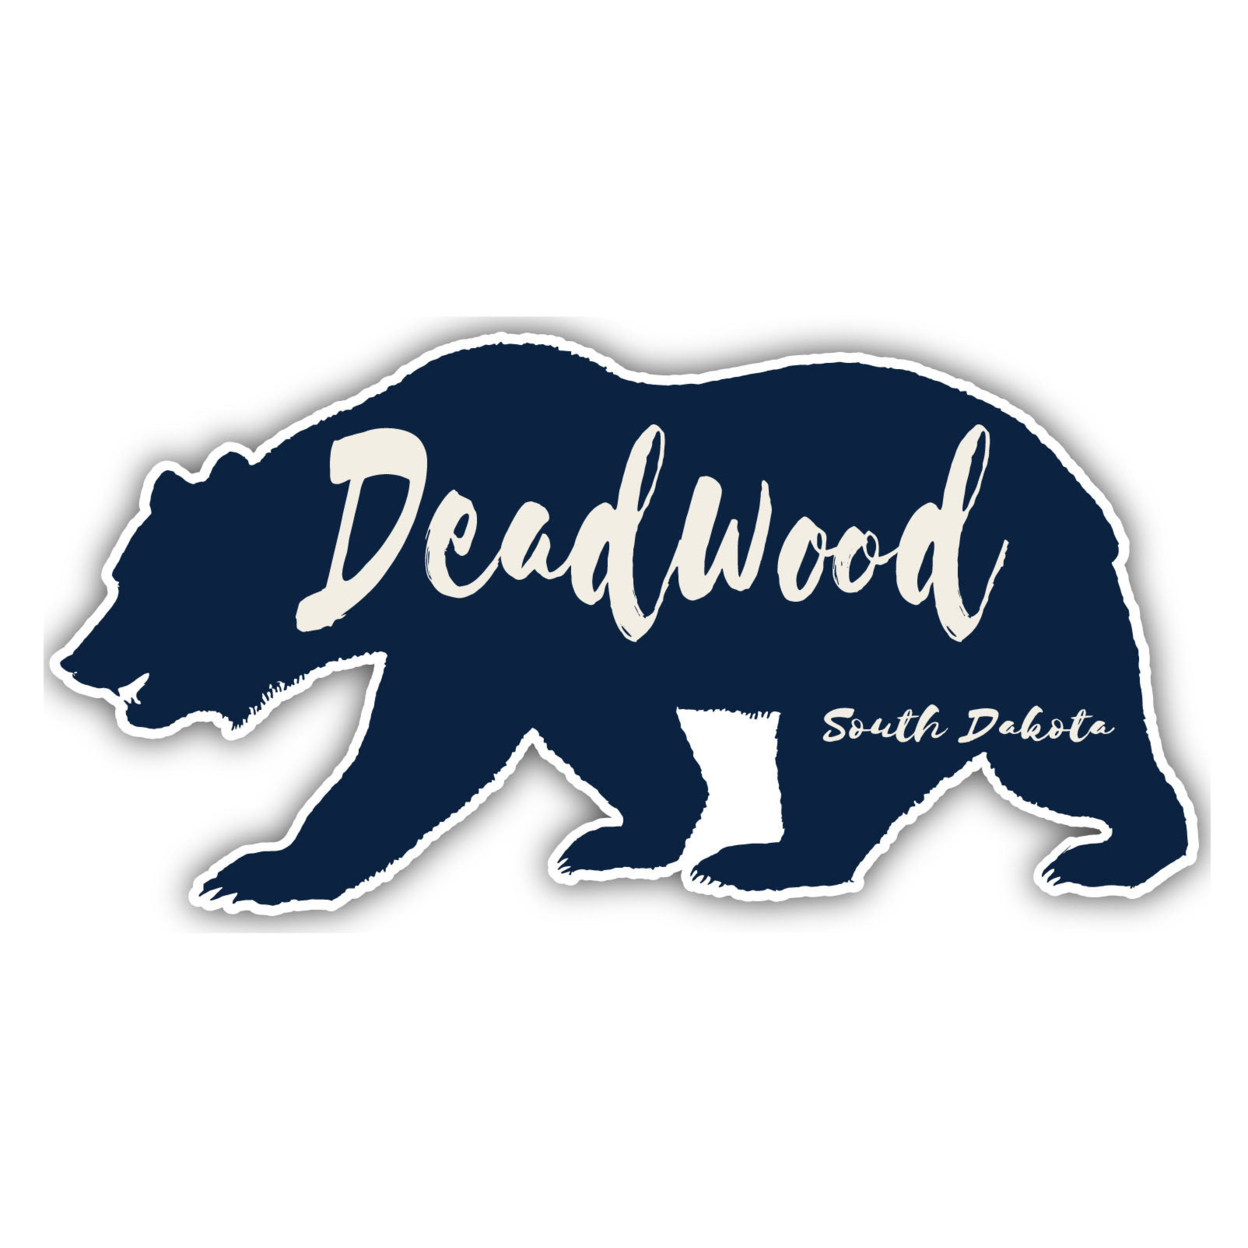 Deadwood South Dakota Souvenir Decorative Stickers (Choose Theme And Size) - 4-Pack, 8-Inch, Bear